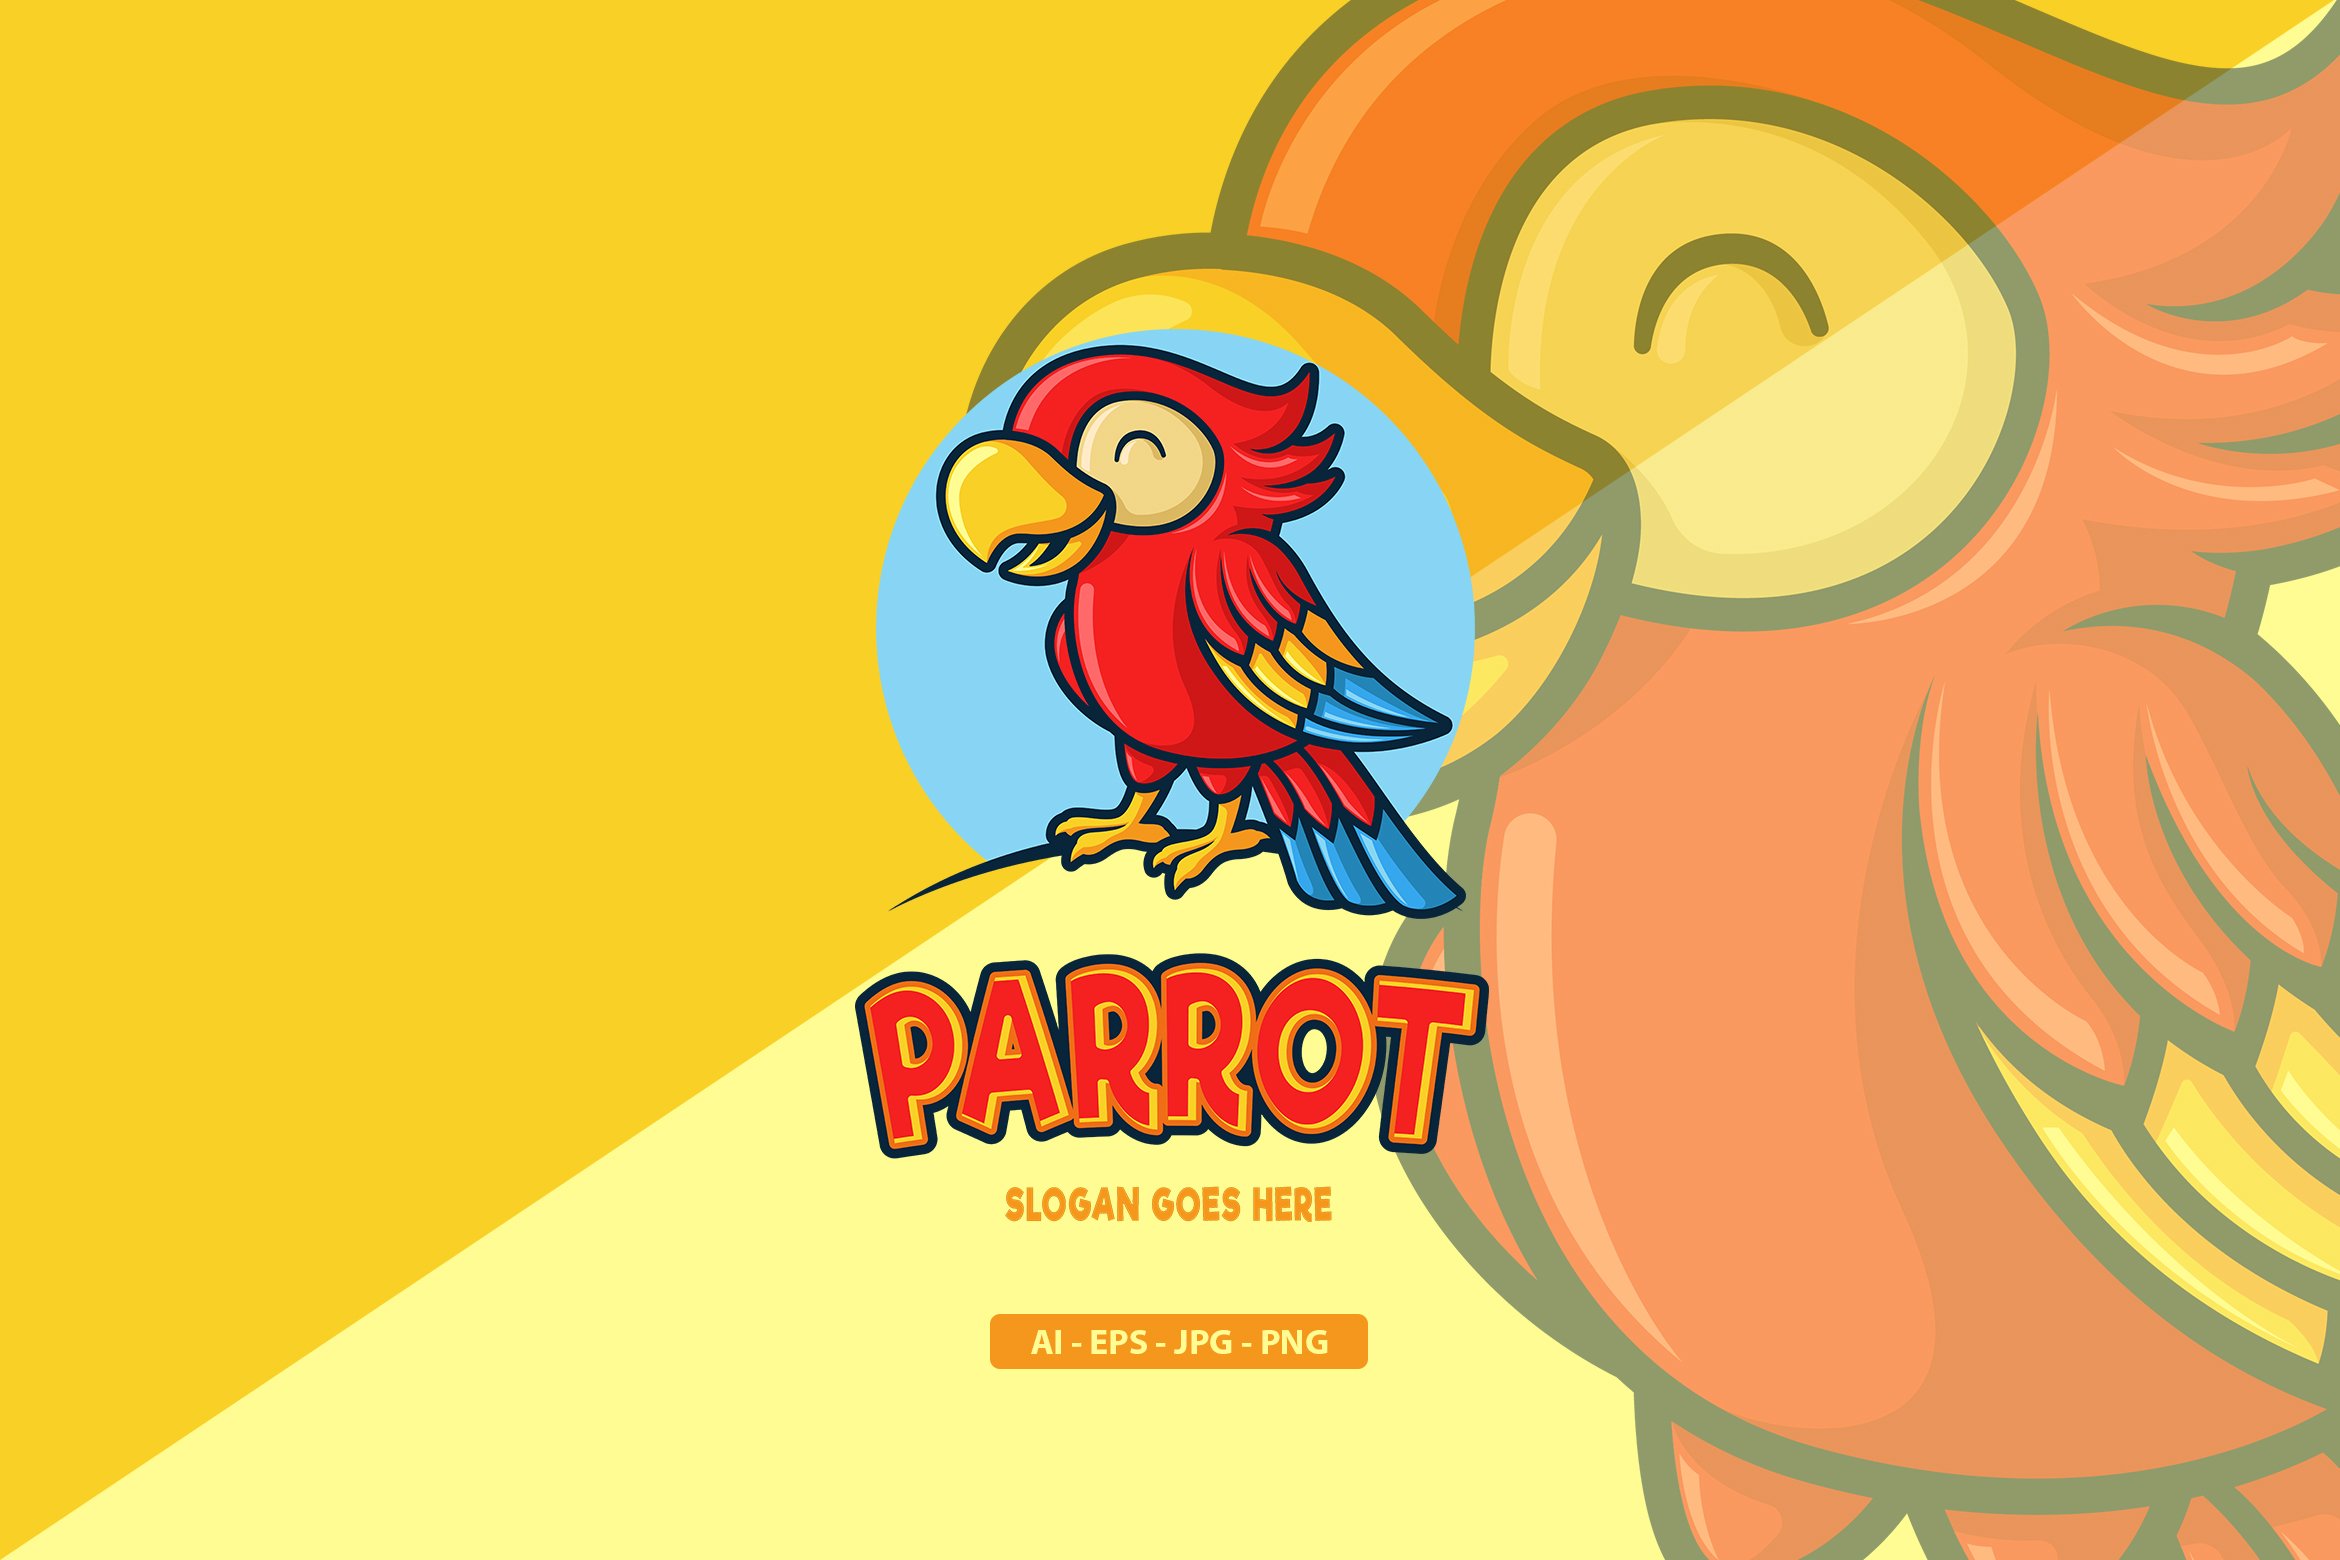 Parrot - Mascot Logo cover image.